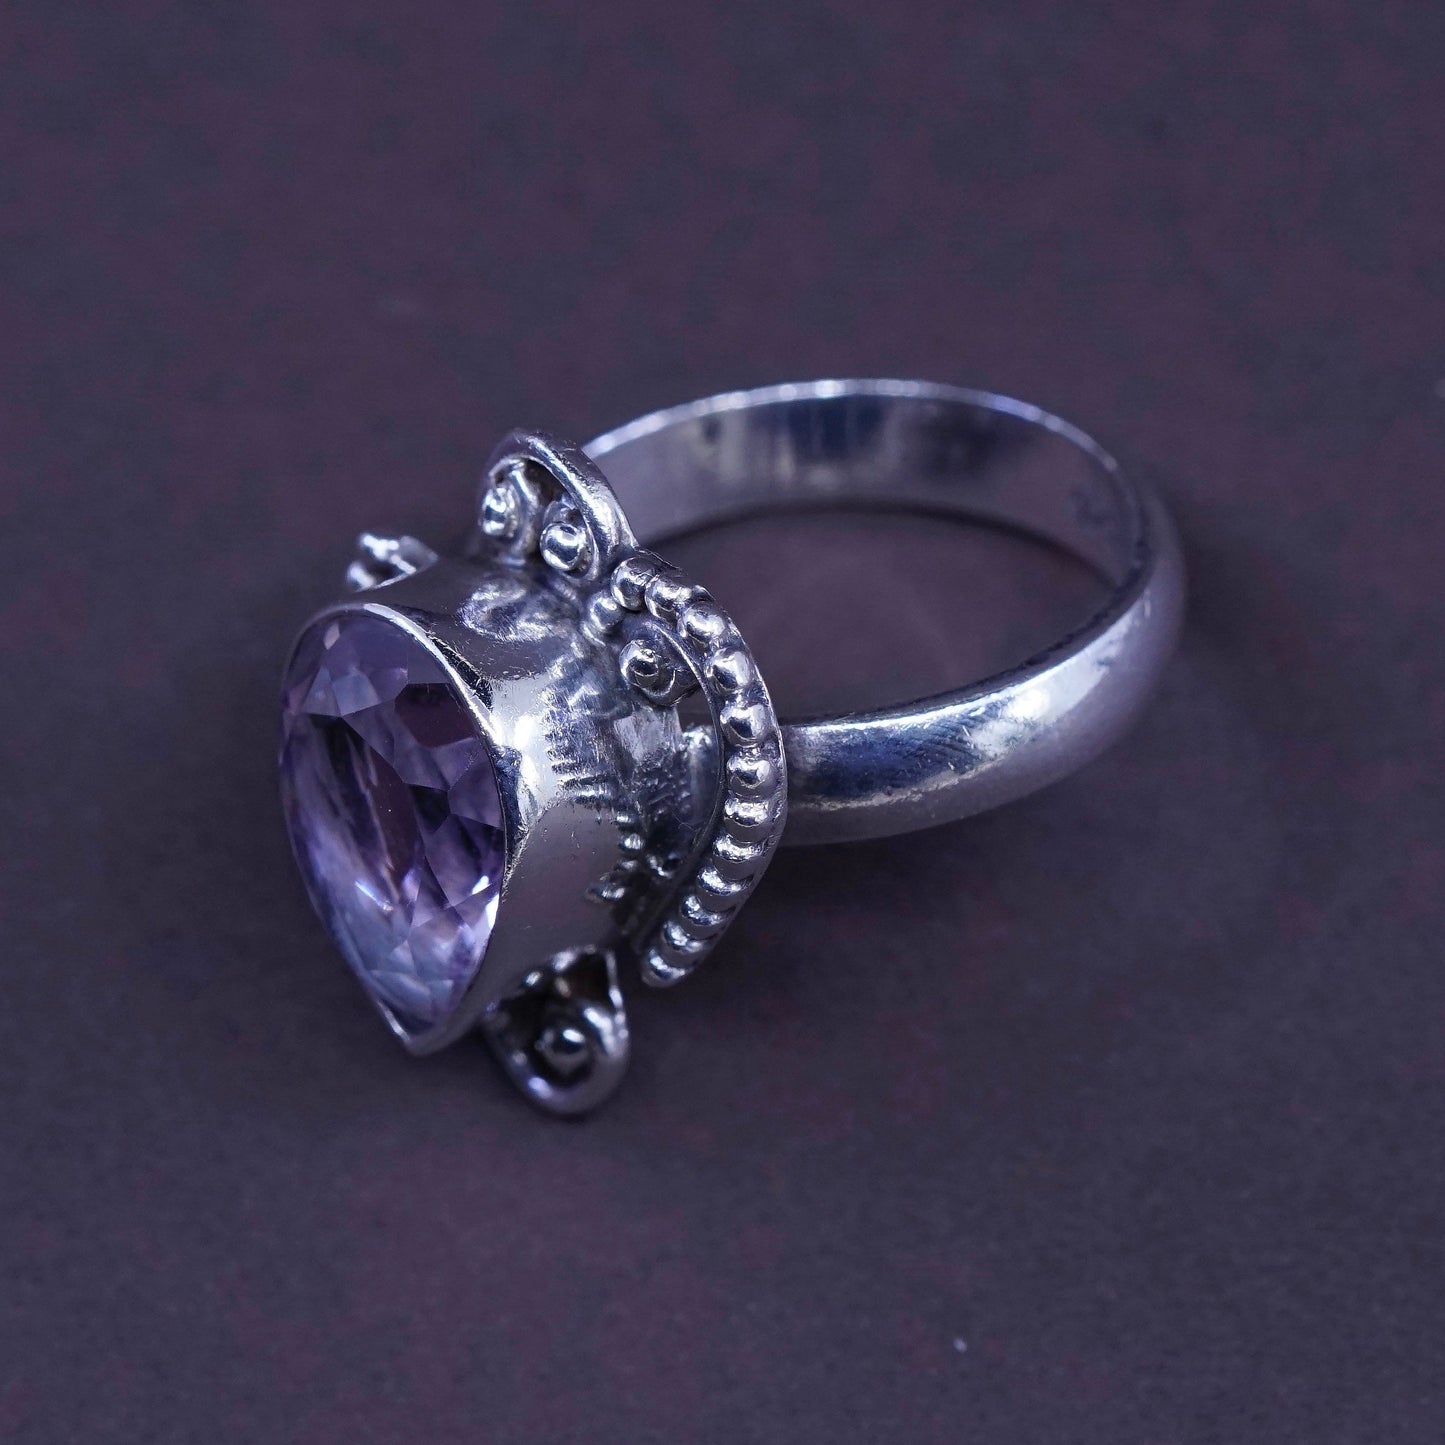 Size 8.5, vtg Sterling 925 silver handmade ring w/ teardrop amethyst N beads